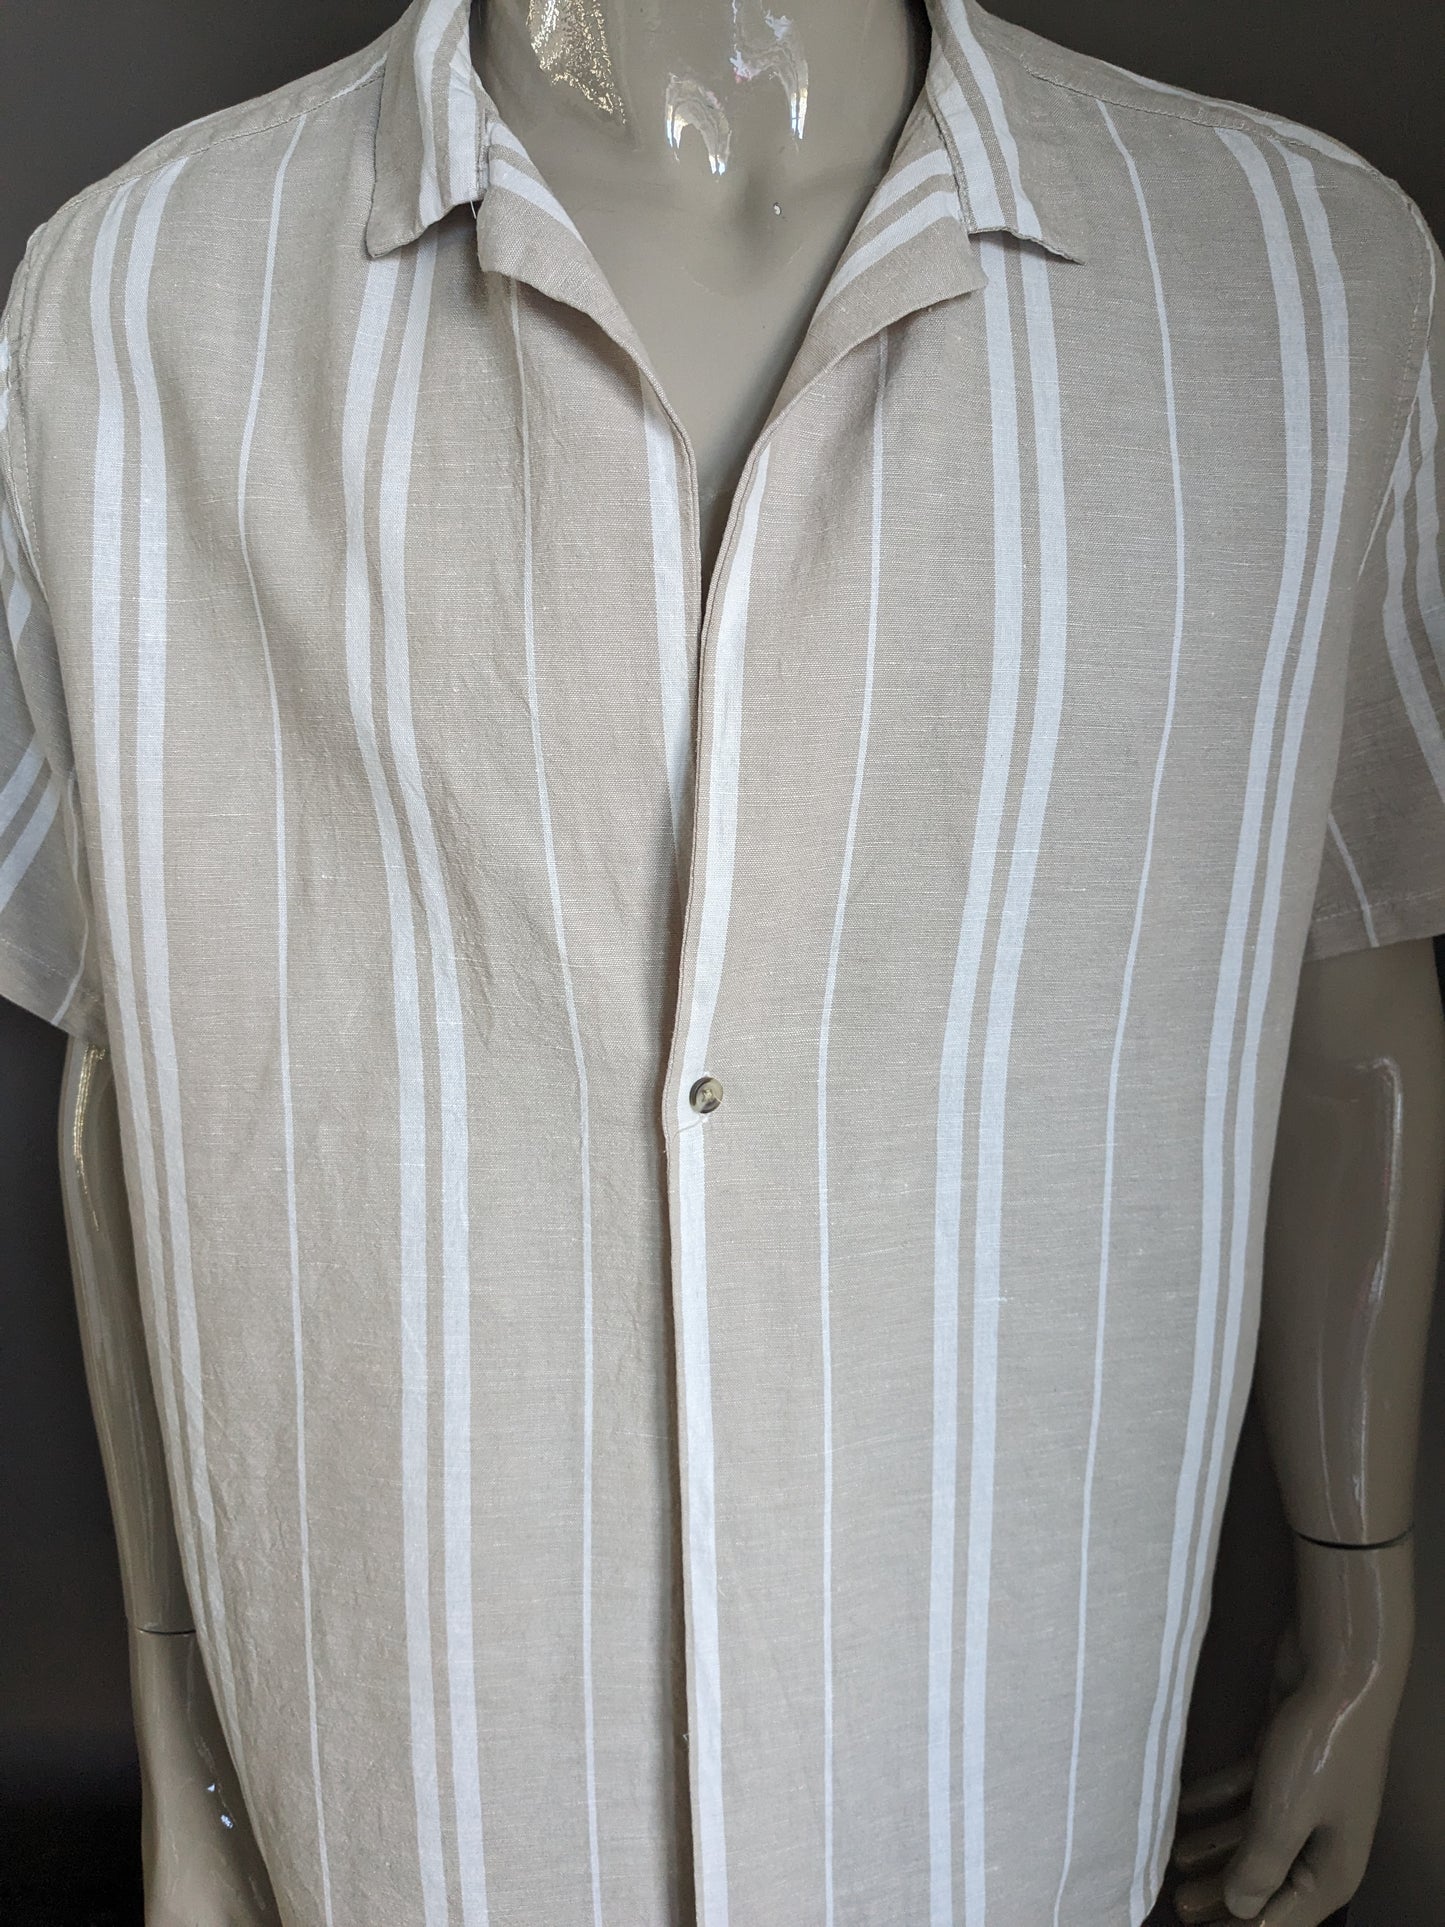 Asos Diseño de camisa de lino Manga corta con 1 nudo. Beige White Striped. Tamaño 2xl / xxl. 53% de lino.